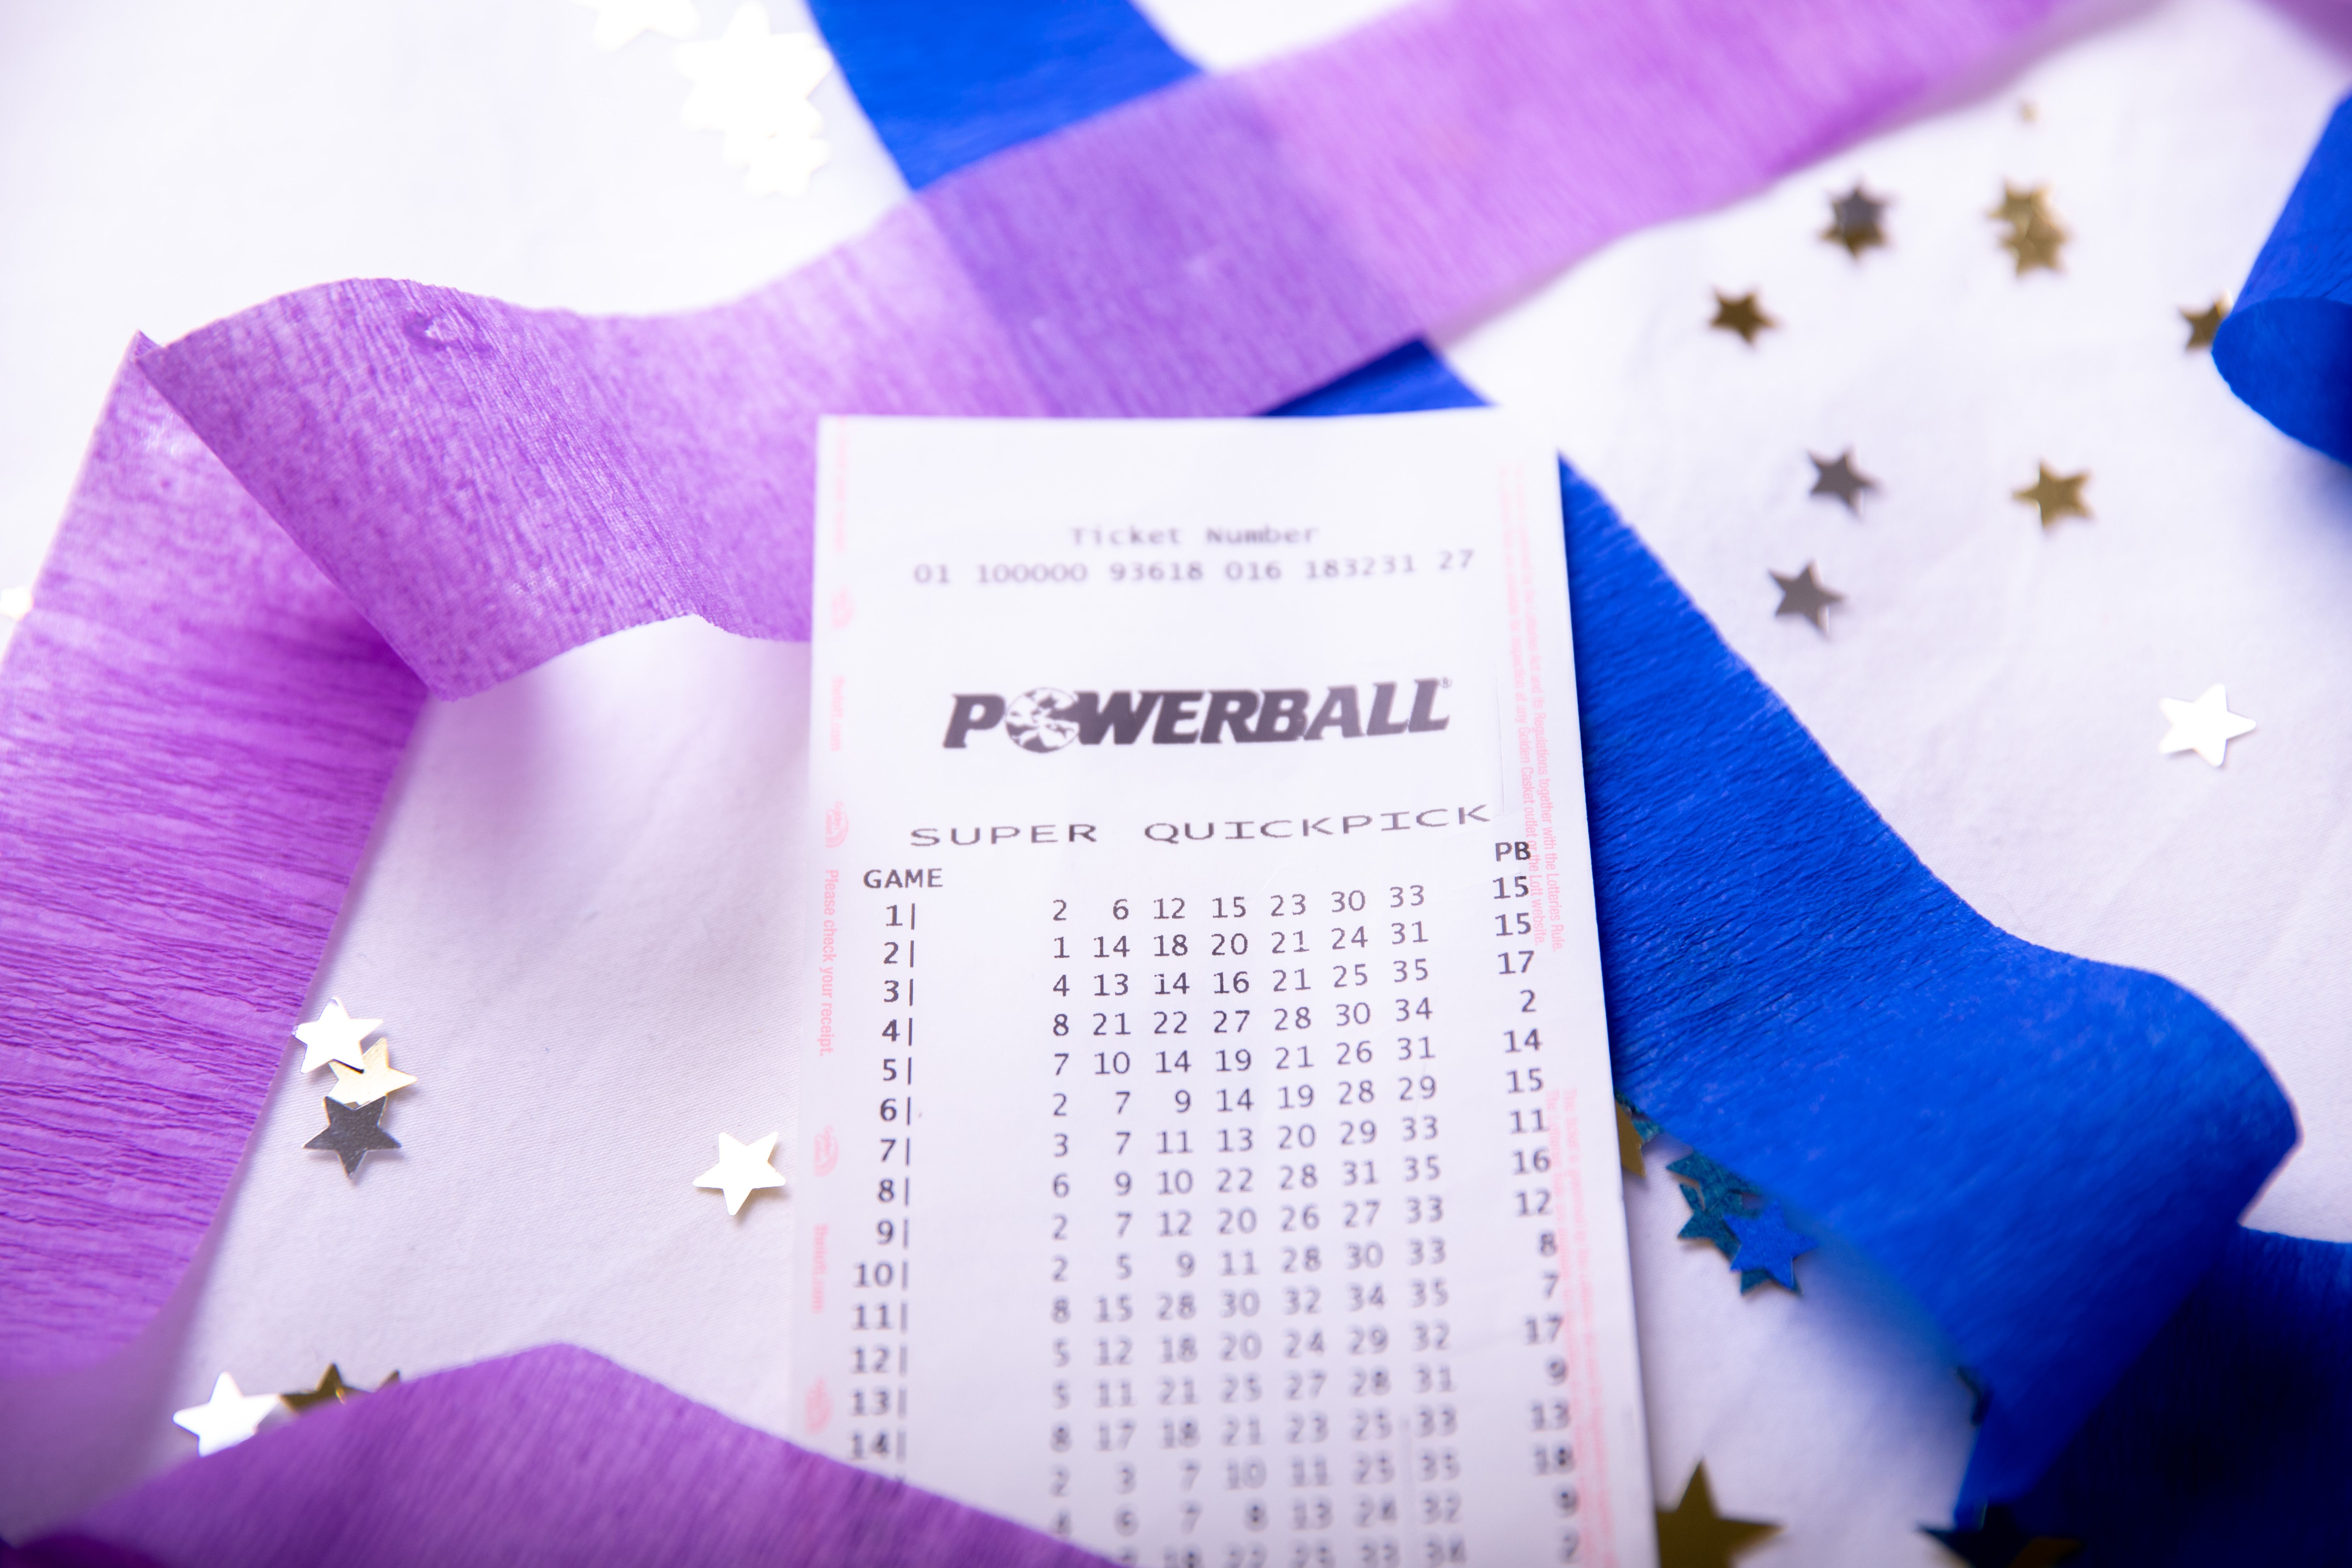 Eye-watering $100 million Powerball jackpot to be drawn tonight